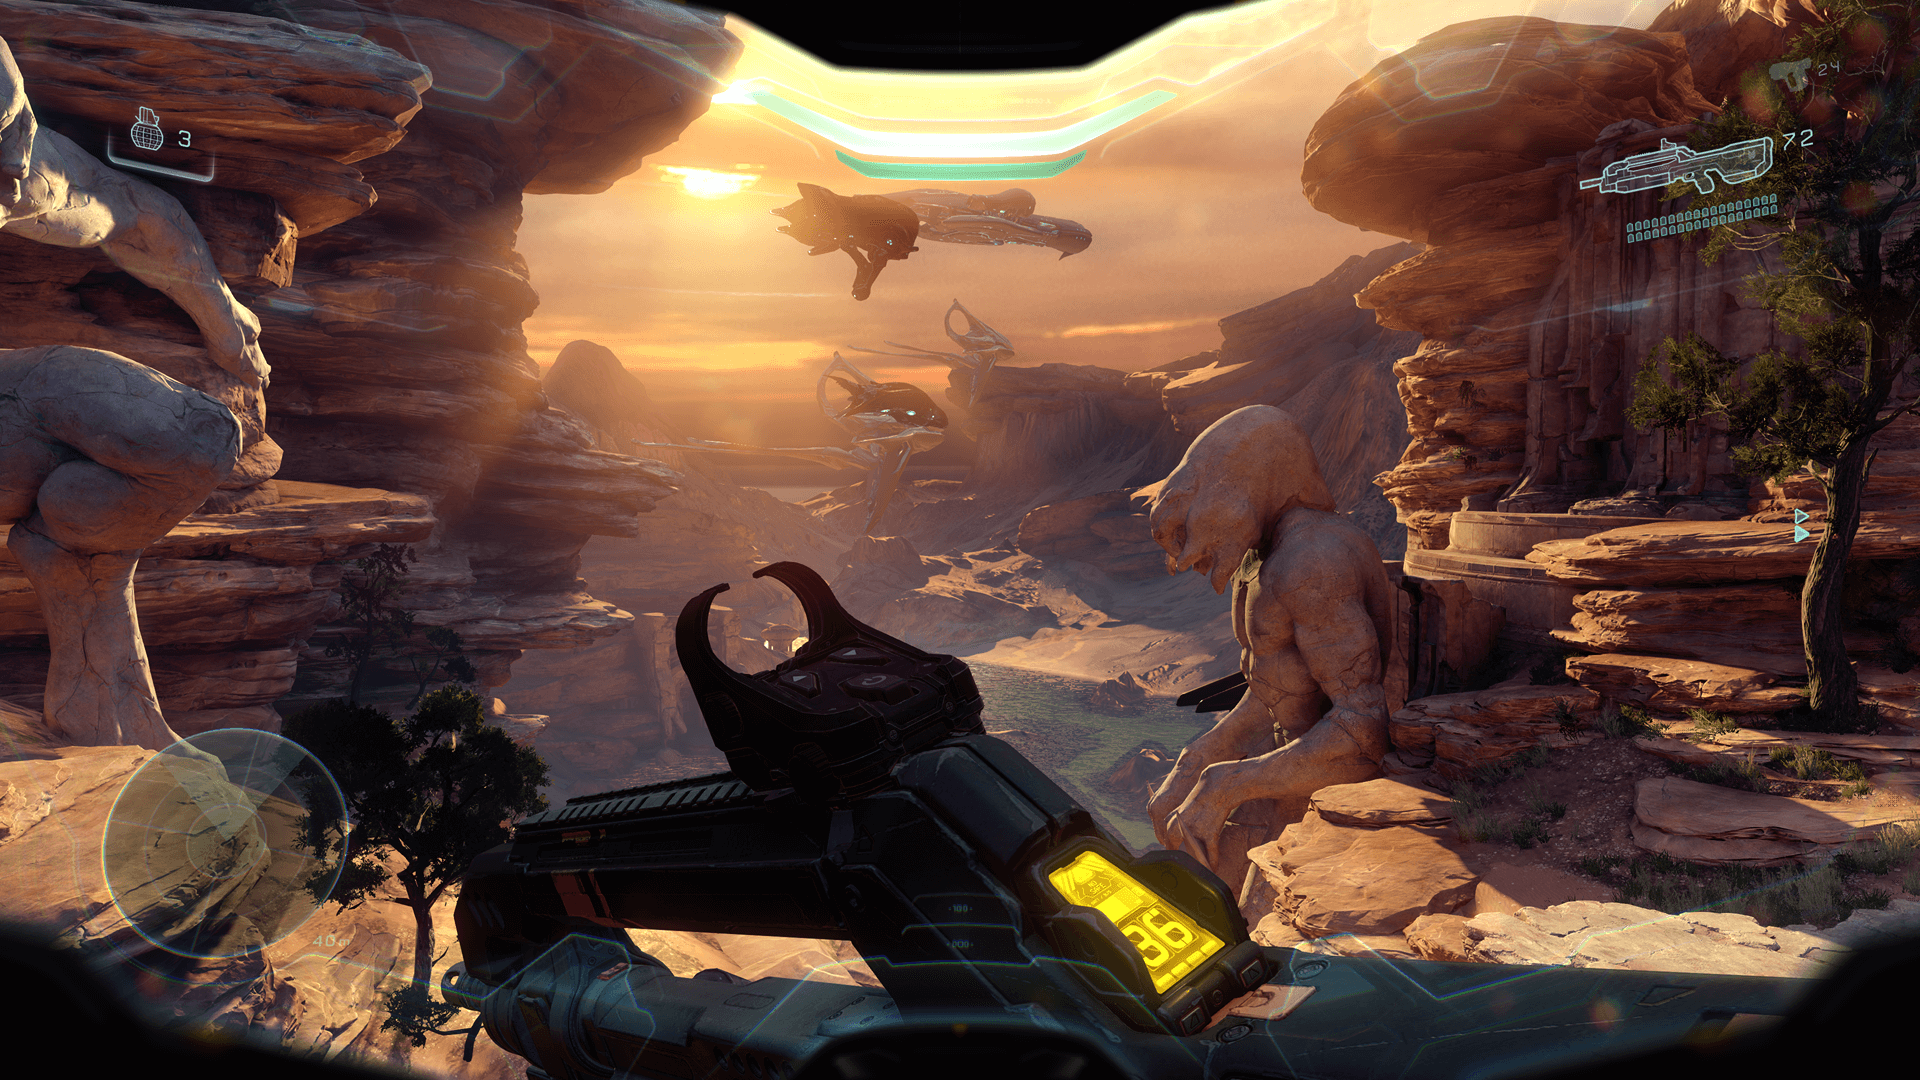 Halo Infinite - Xbox One / Xbox Series X – Cybertron Video Games